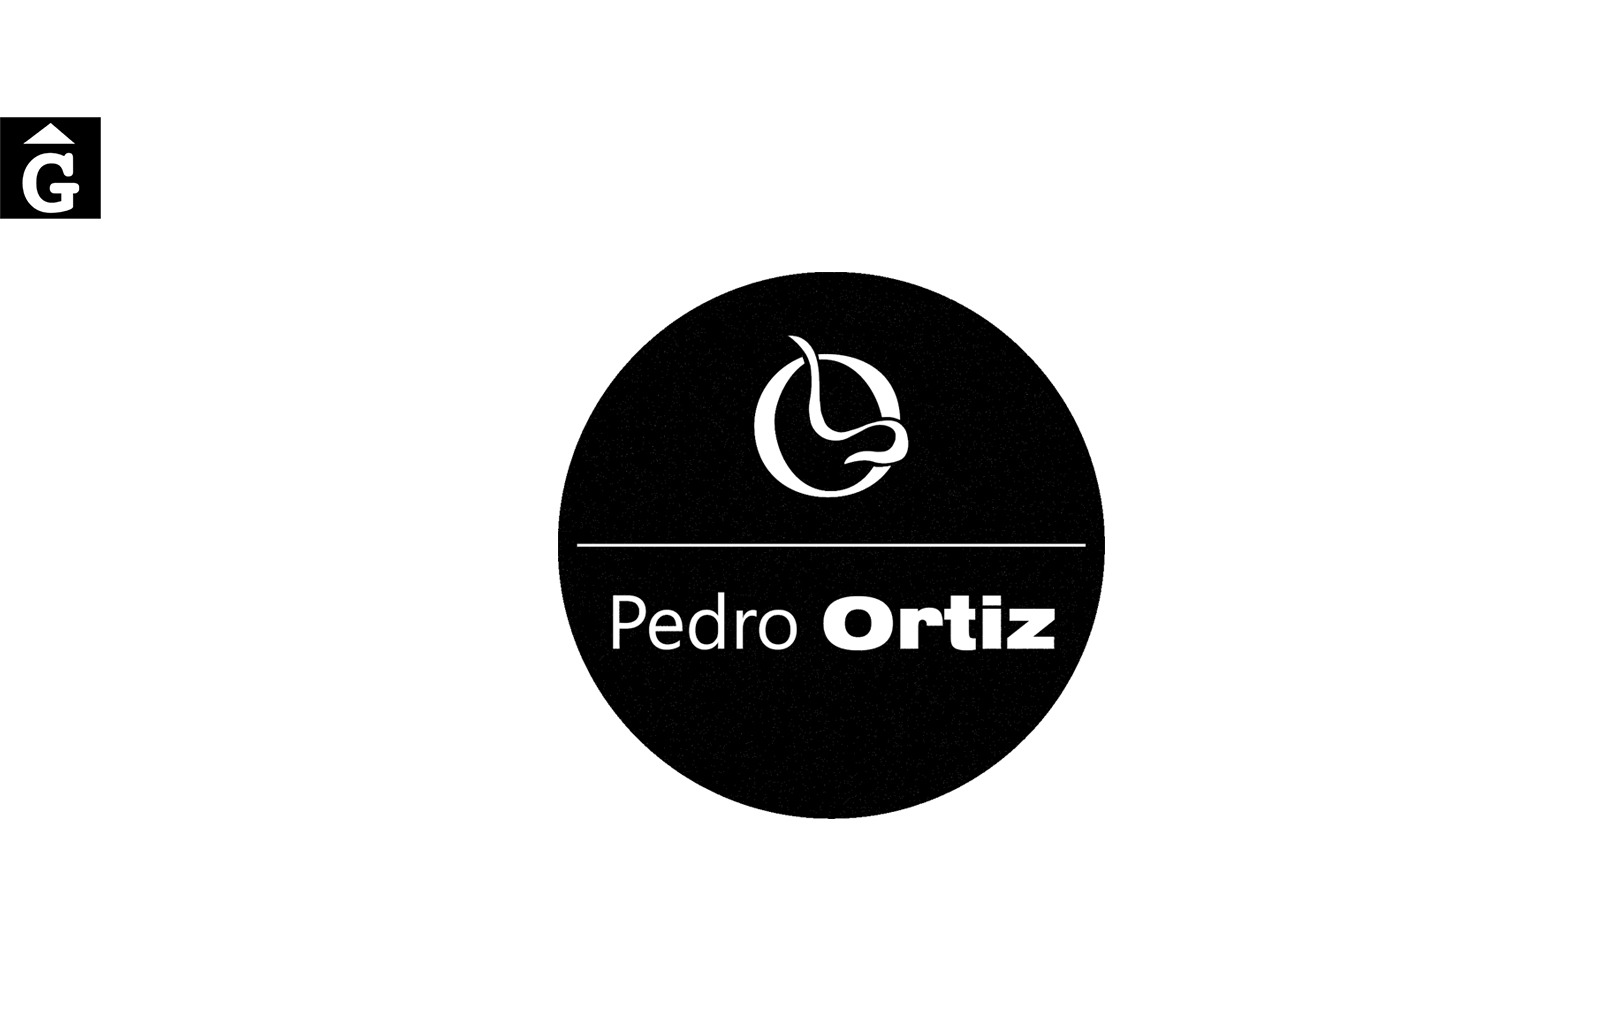 Pedro Ortiz logo marca mobles Gifreu